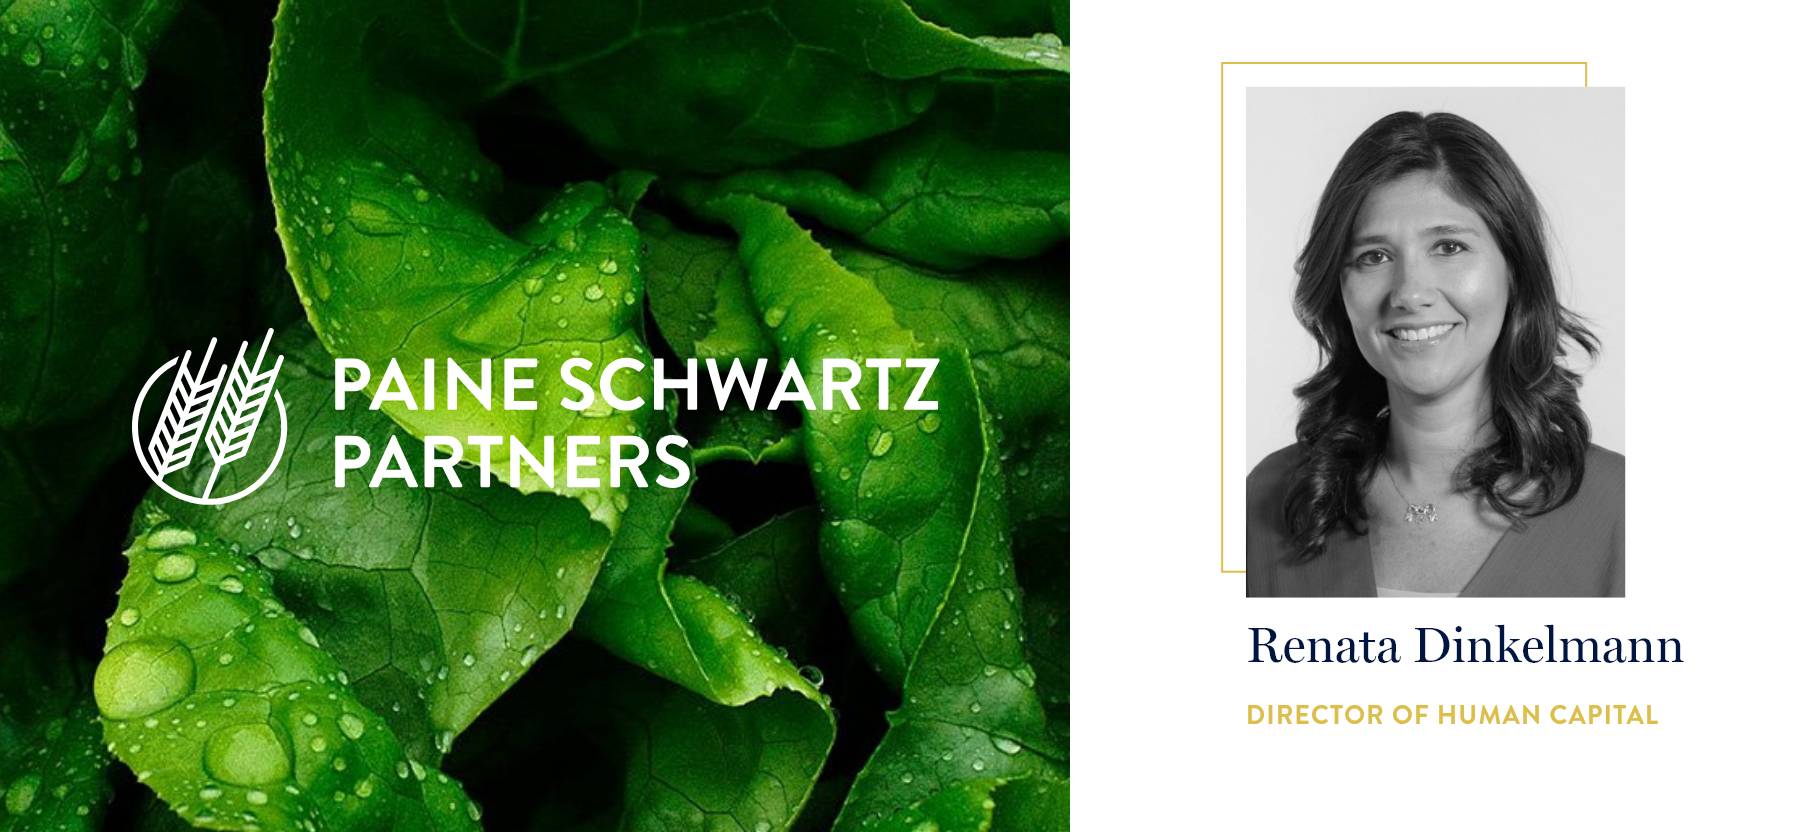 Paine Schwartz Partners Adds Renata Dinkelmann as Director – Human Capital2@2x